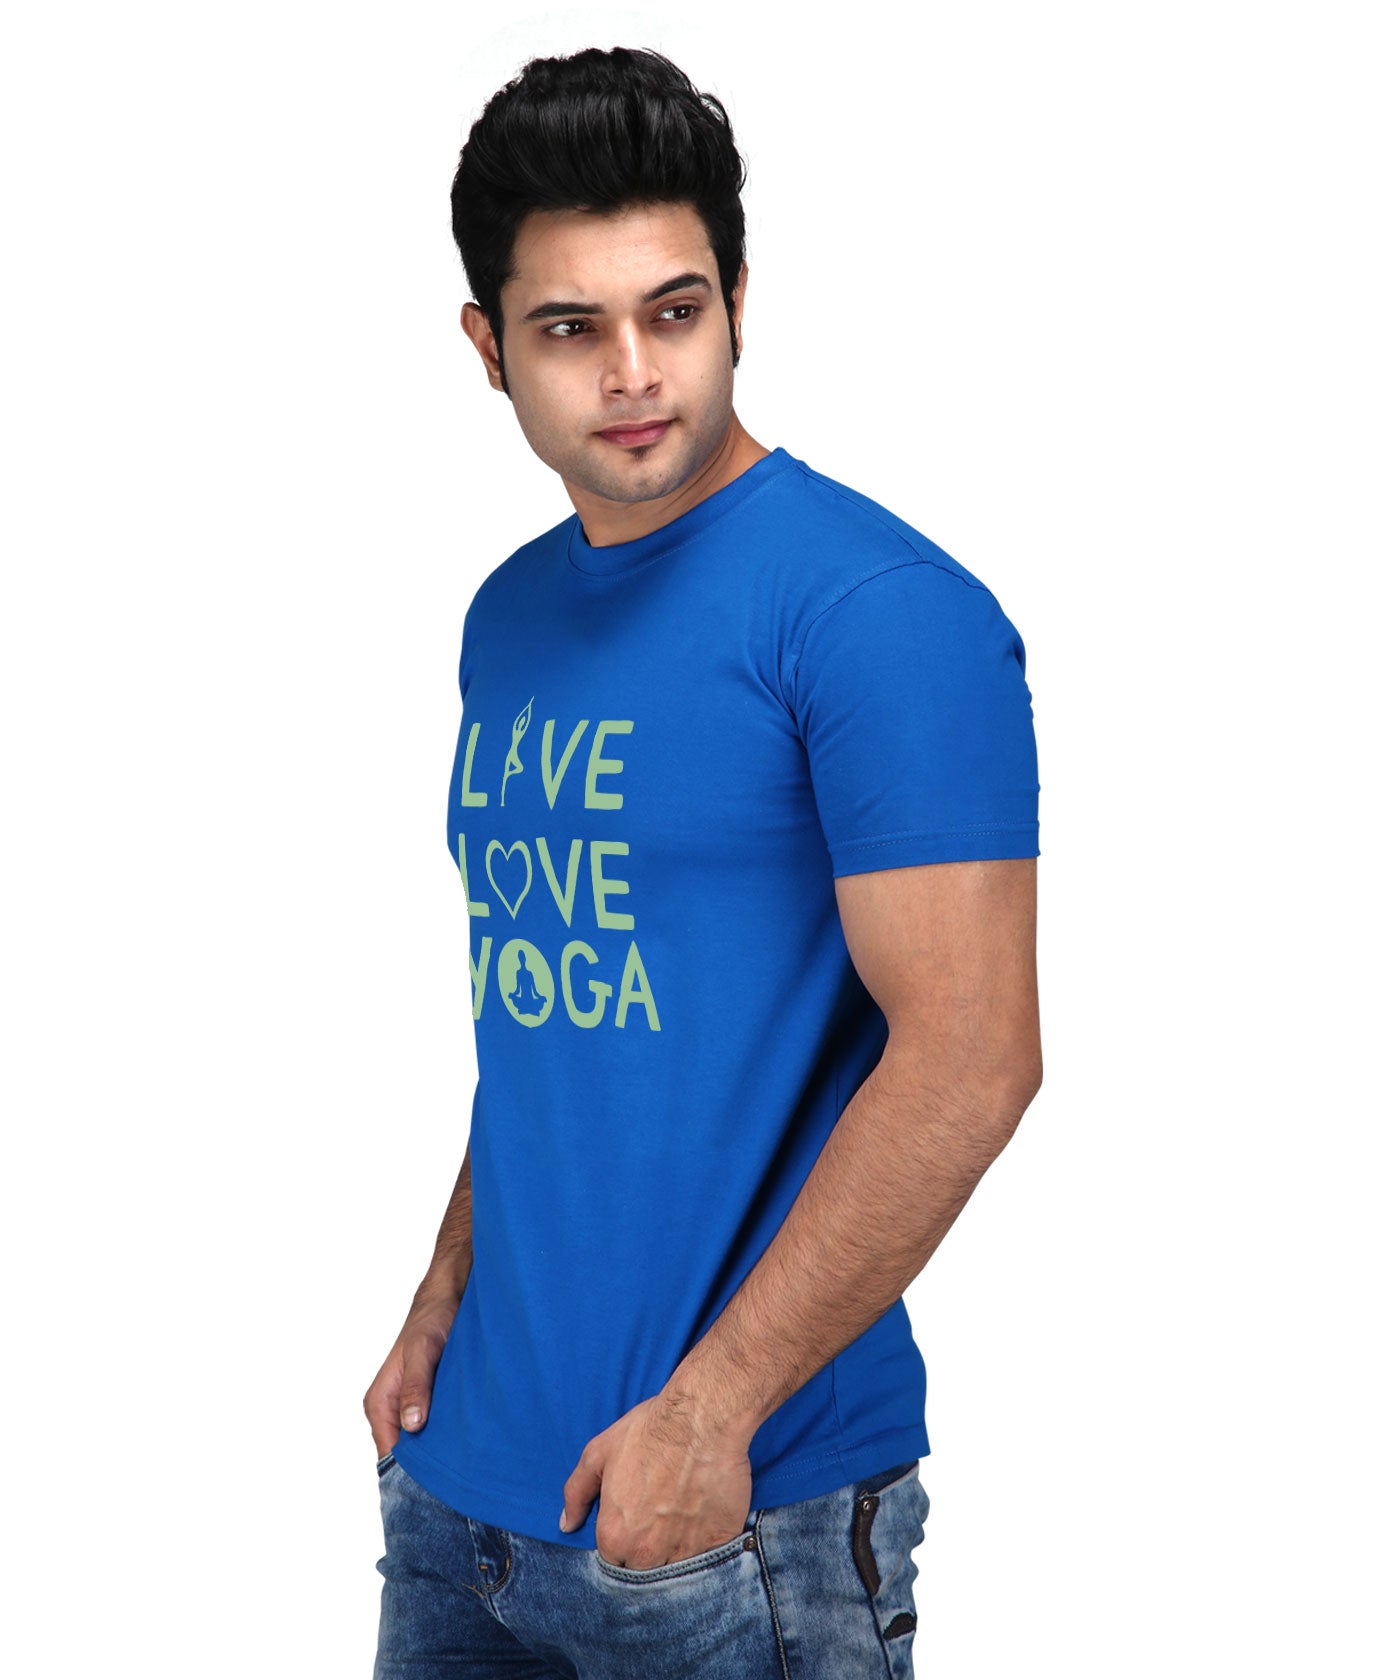 Live Love Yoga - Unisex T-Shirt - Royal Blue